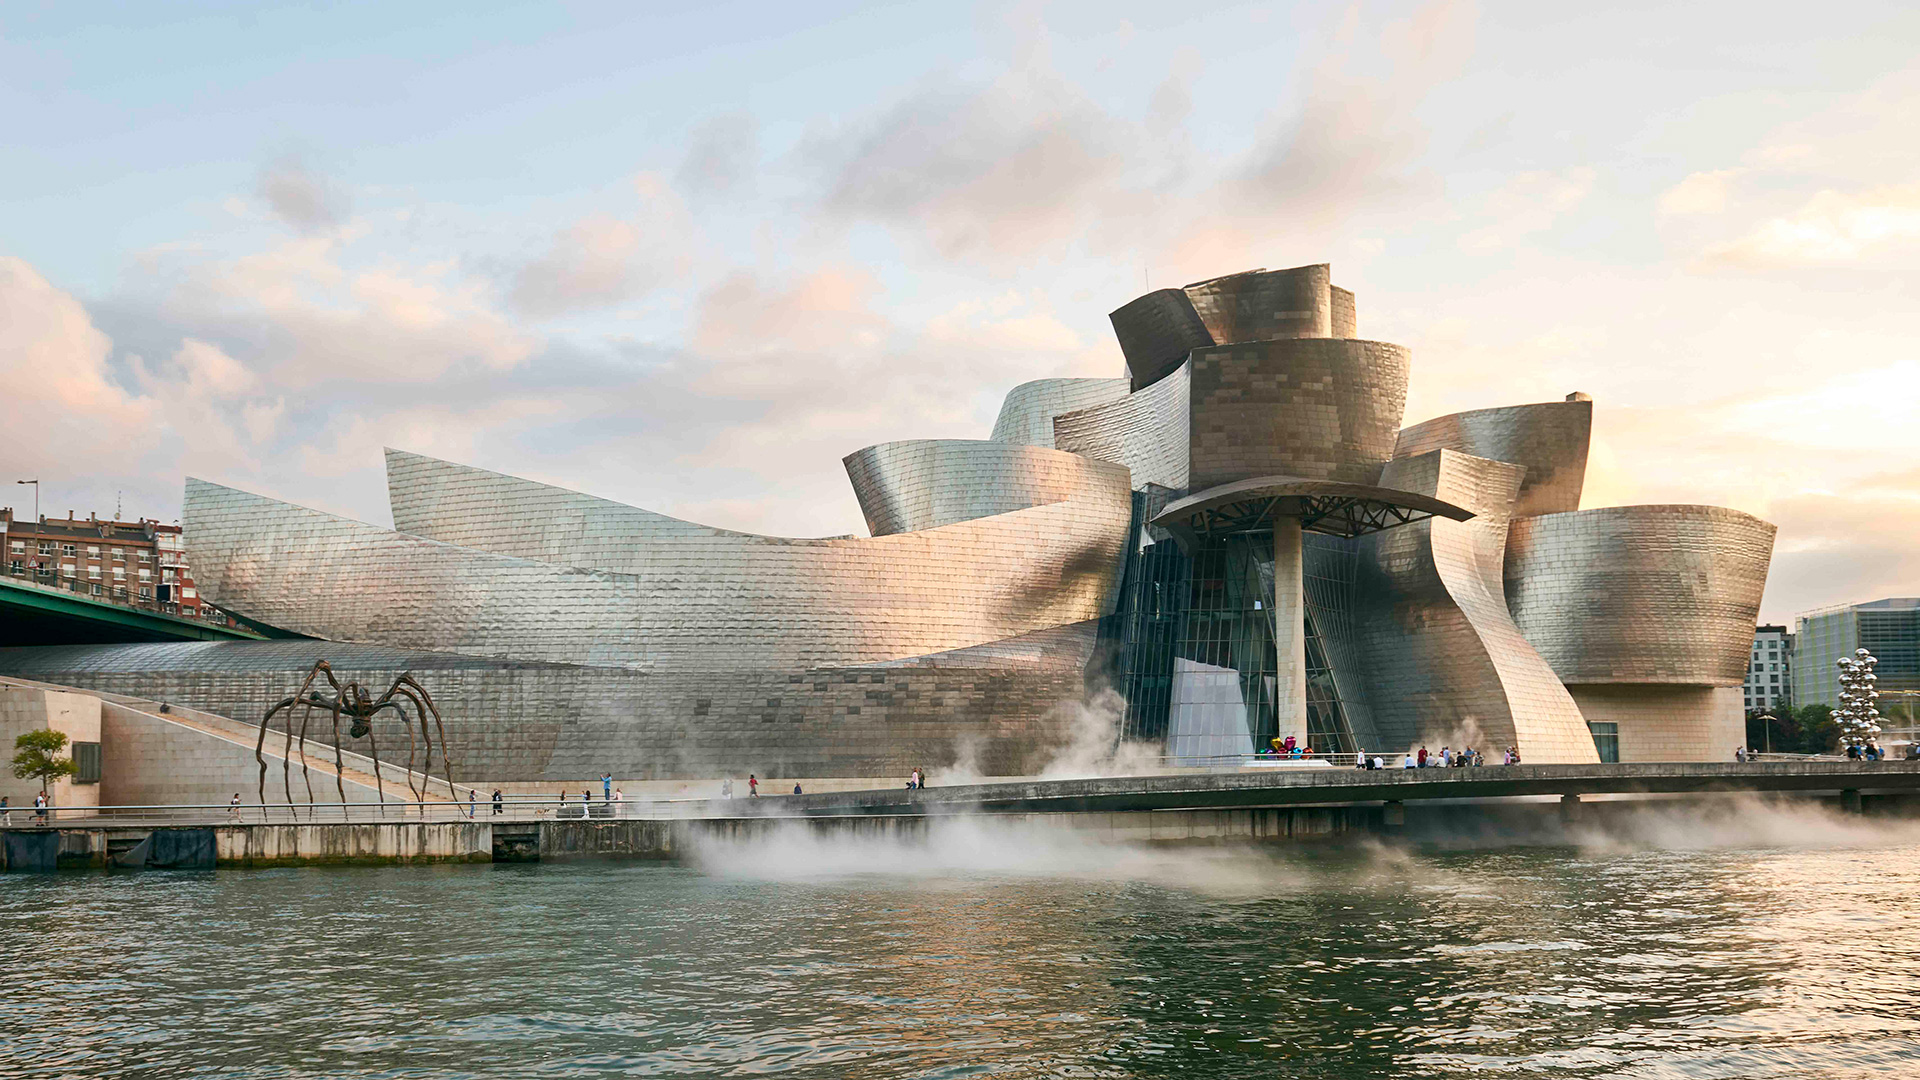 1996. Nuevo Museo Guggenheim: Picasso y Kandinsky llegan a Bilbao